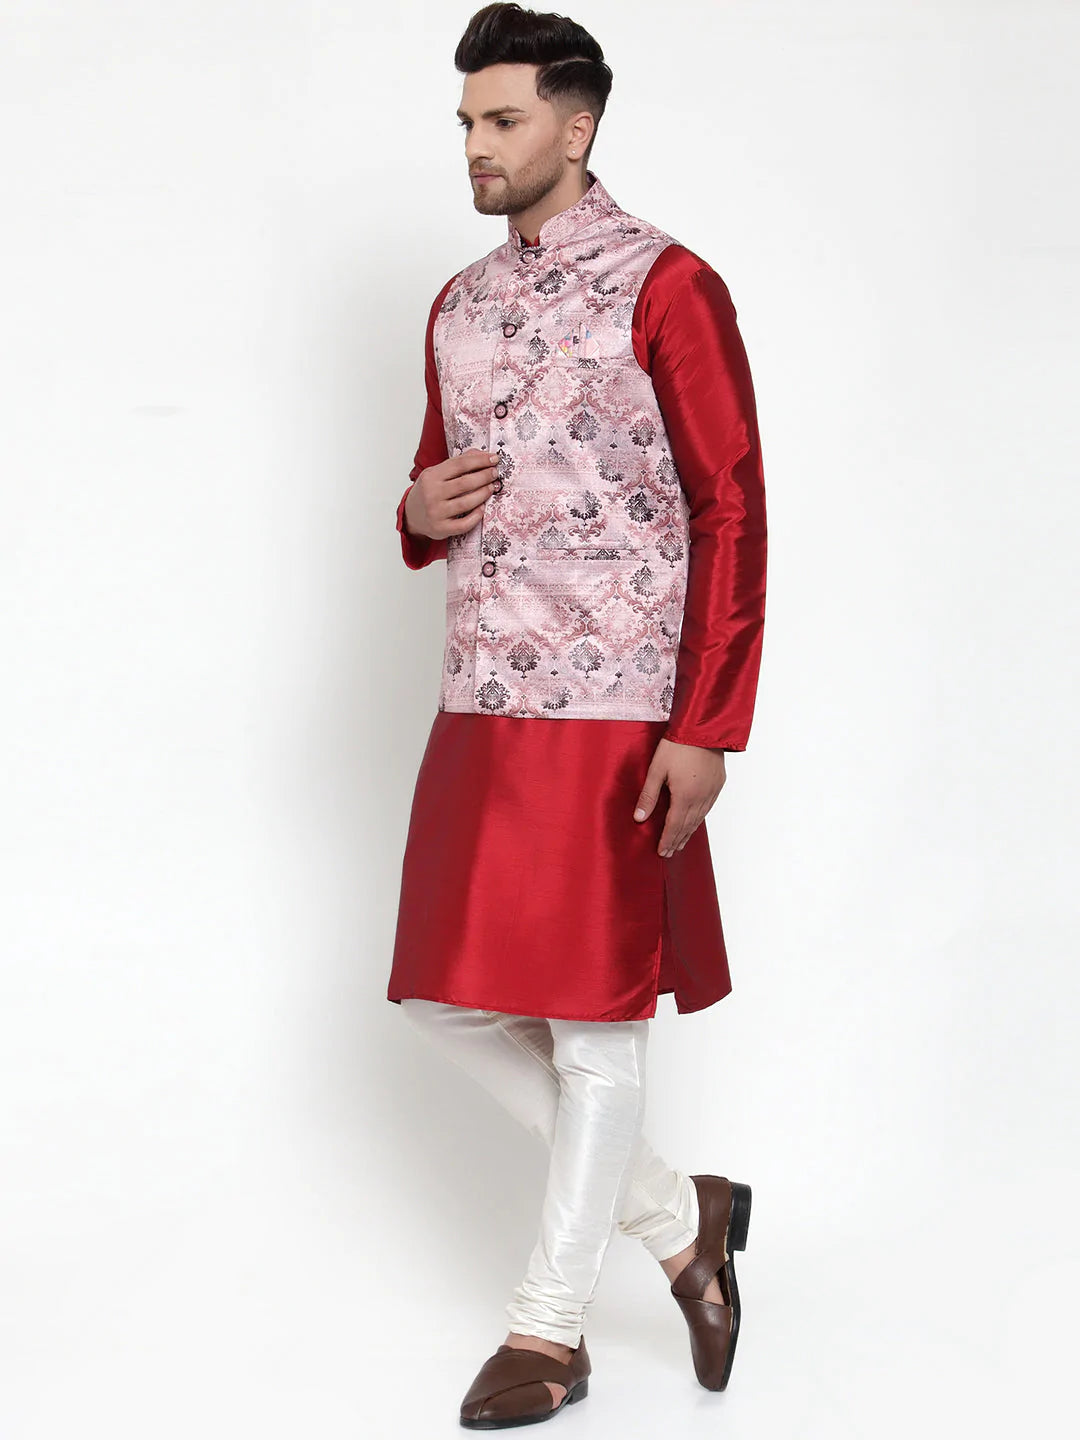 Jompers Men's Solid Dupion Kurta Pajama with Printed Nehru Jacket ( JOKPWC M-D 4014Pink )